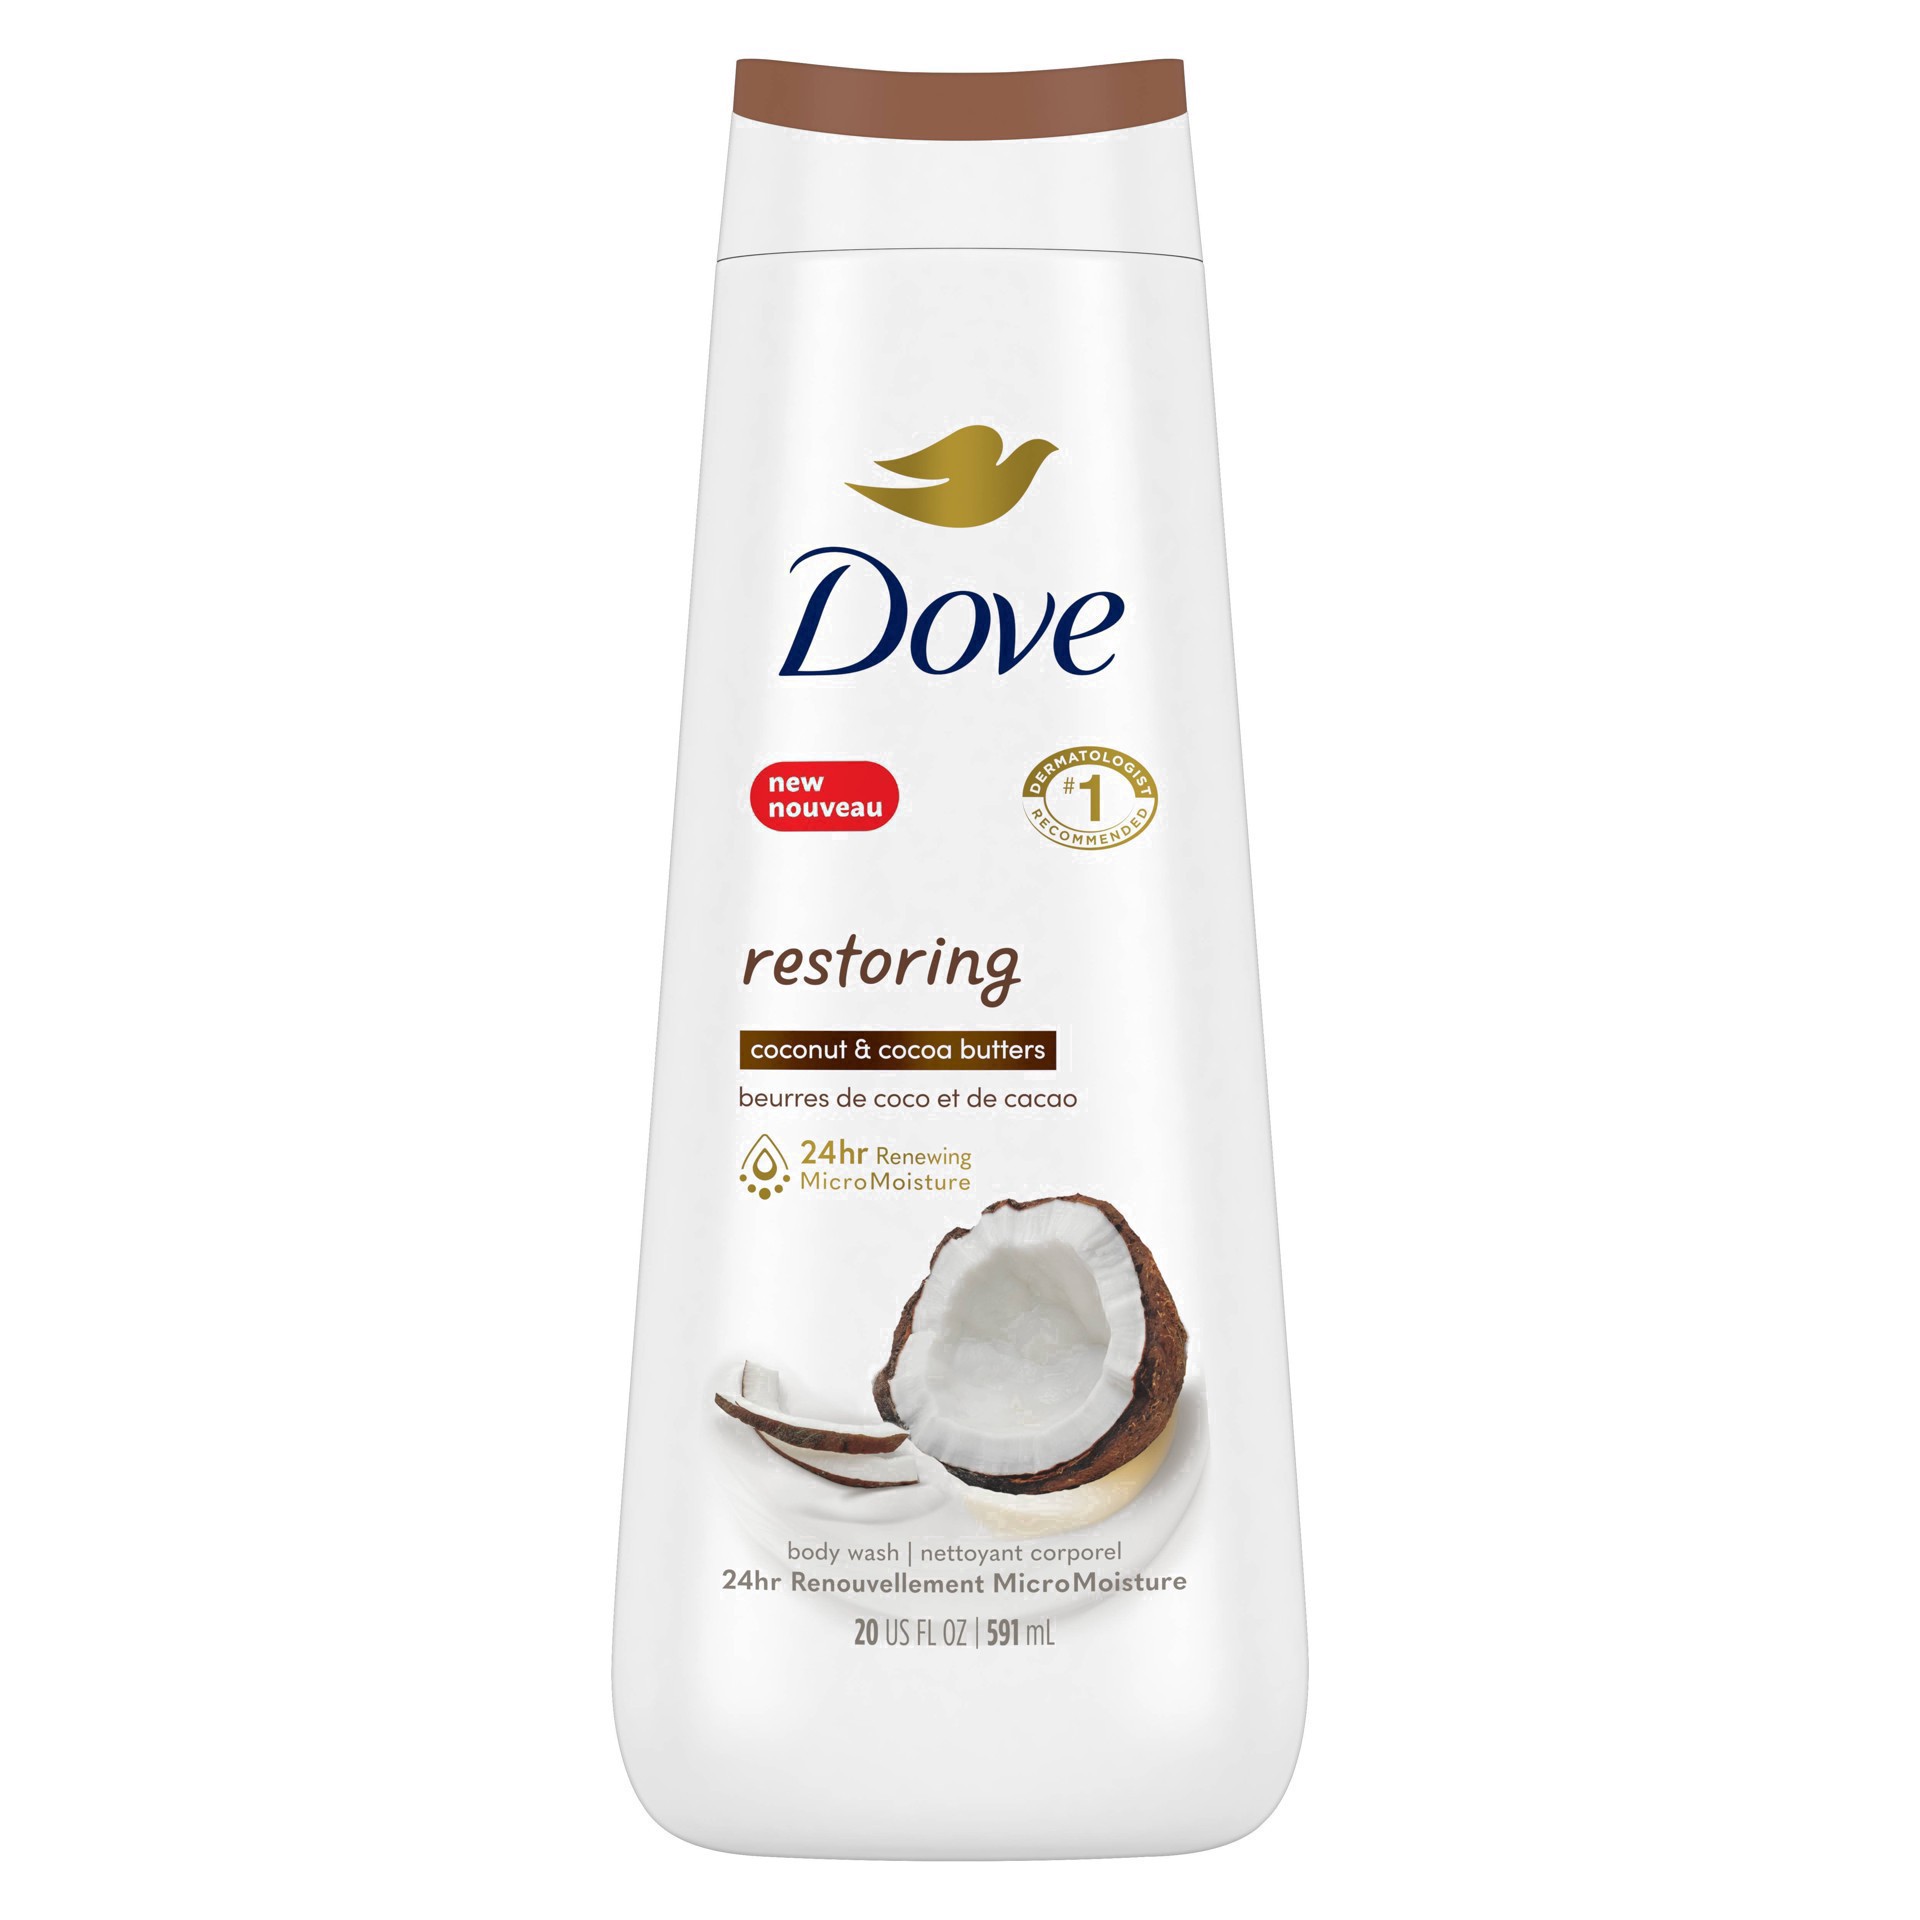 slide 20 of 91, Dove Bc Restoring Coconut Butter & Cocoa Butter Bodywash, 20 fl oz